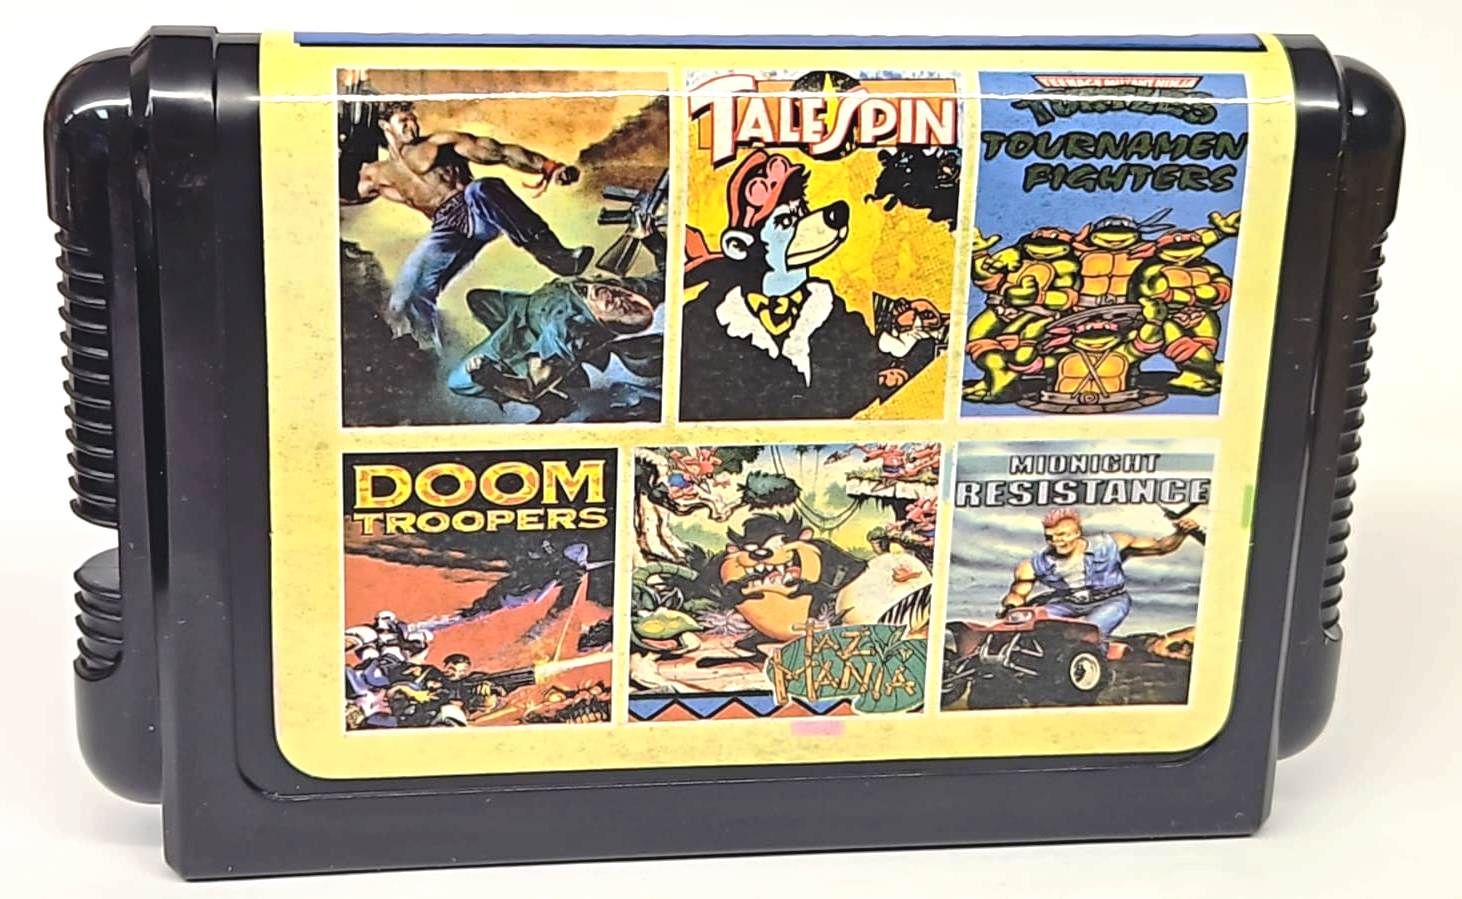   Sega AA  6103 6 in 1 (Sega), Contra,Doom Troopers,Midnight Resistance,Talespin,Tazmania,Turtle Fighter